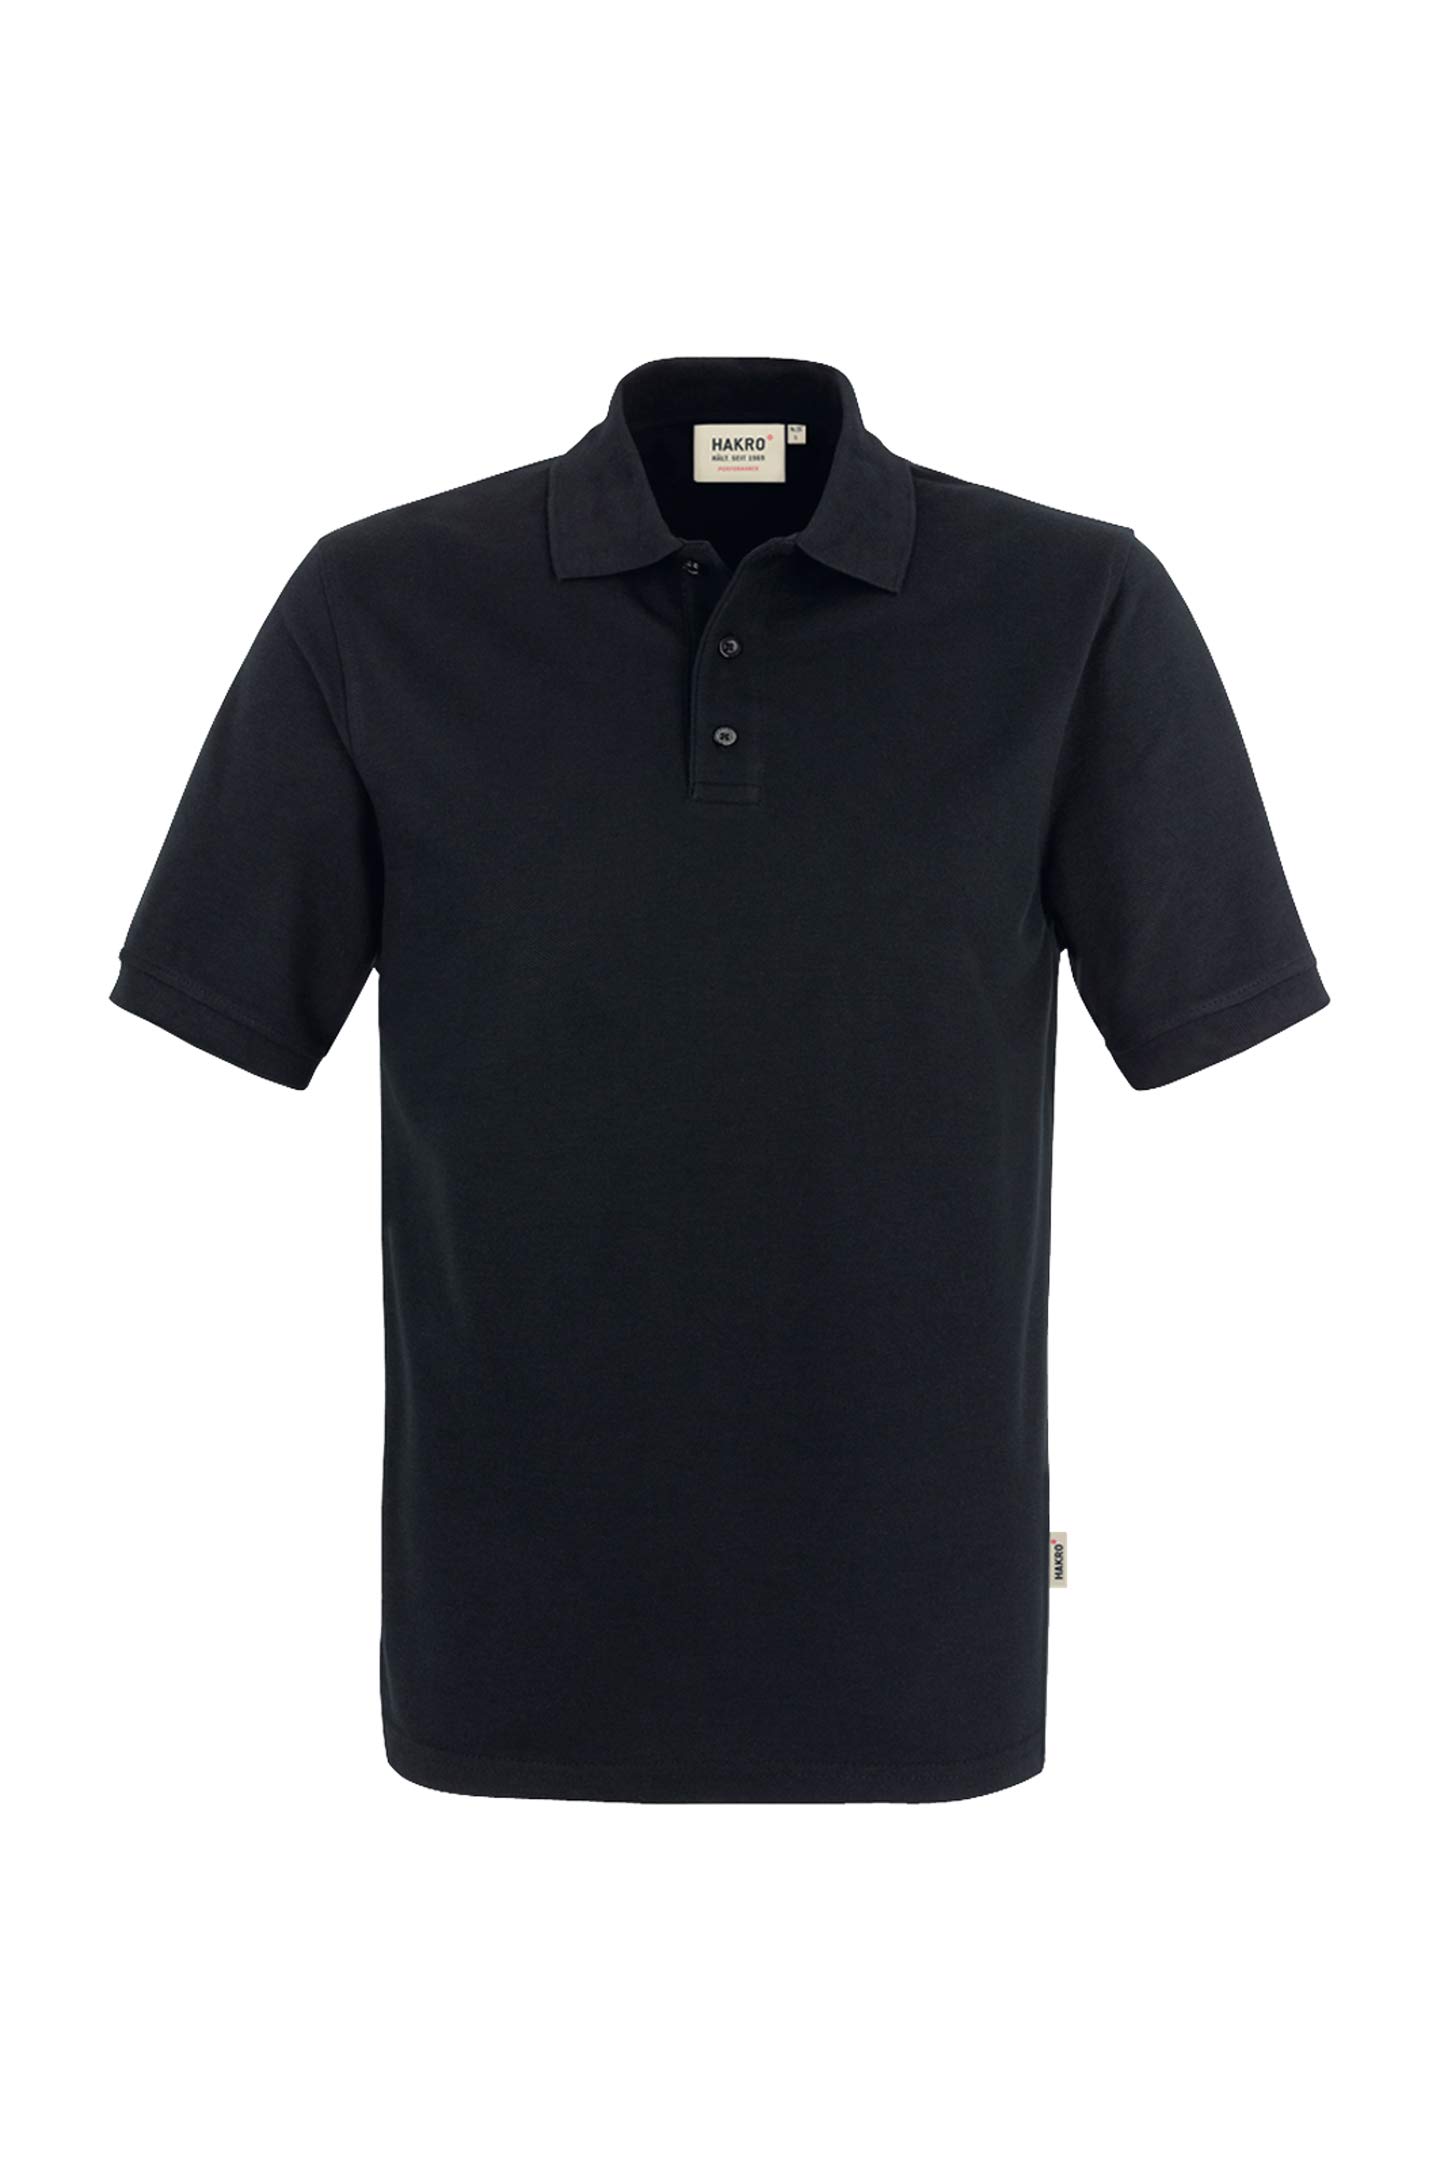 HAKRO Motoo Polo-Shirt schwarz Gr L von HAKRO